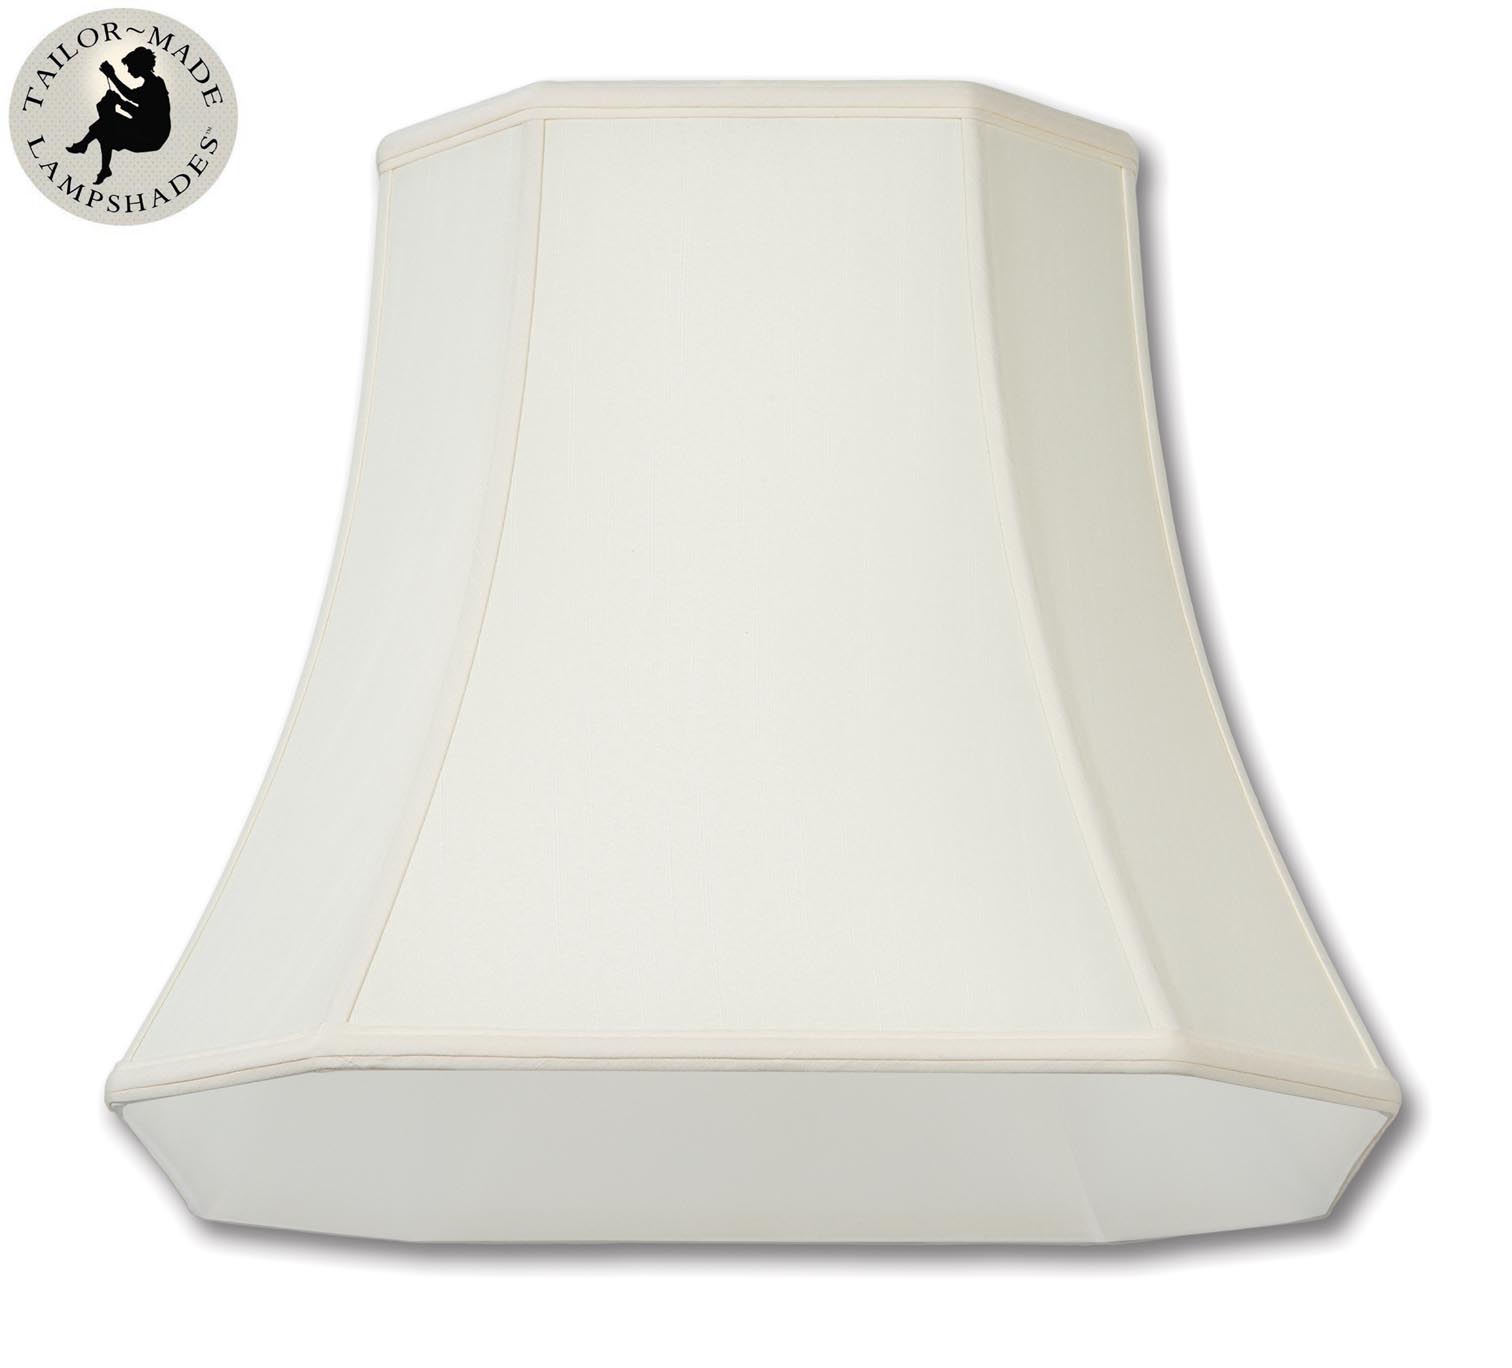 Cut Corner Square Lamp Shades - Eggshell Color, Tissue Shantung Material